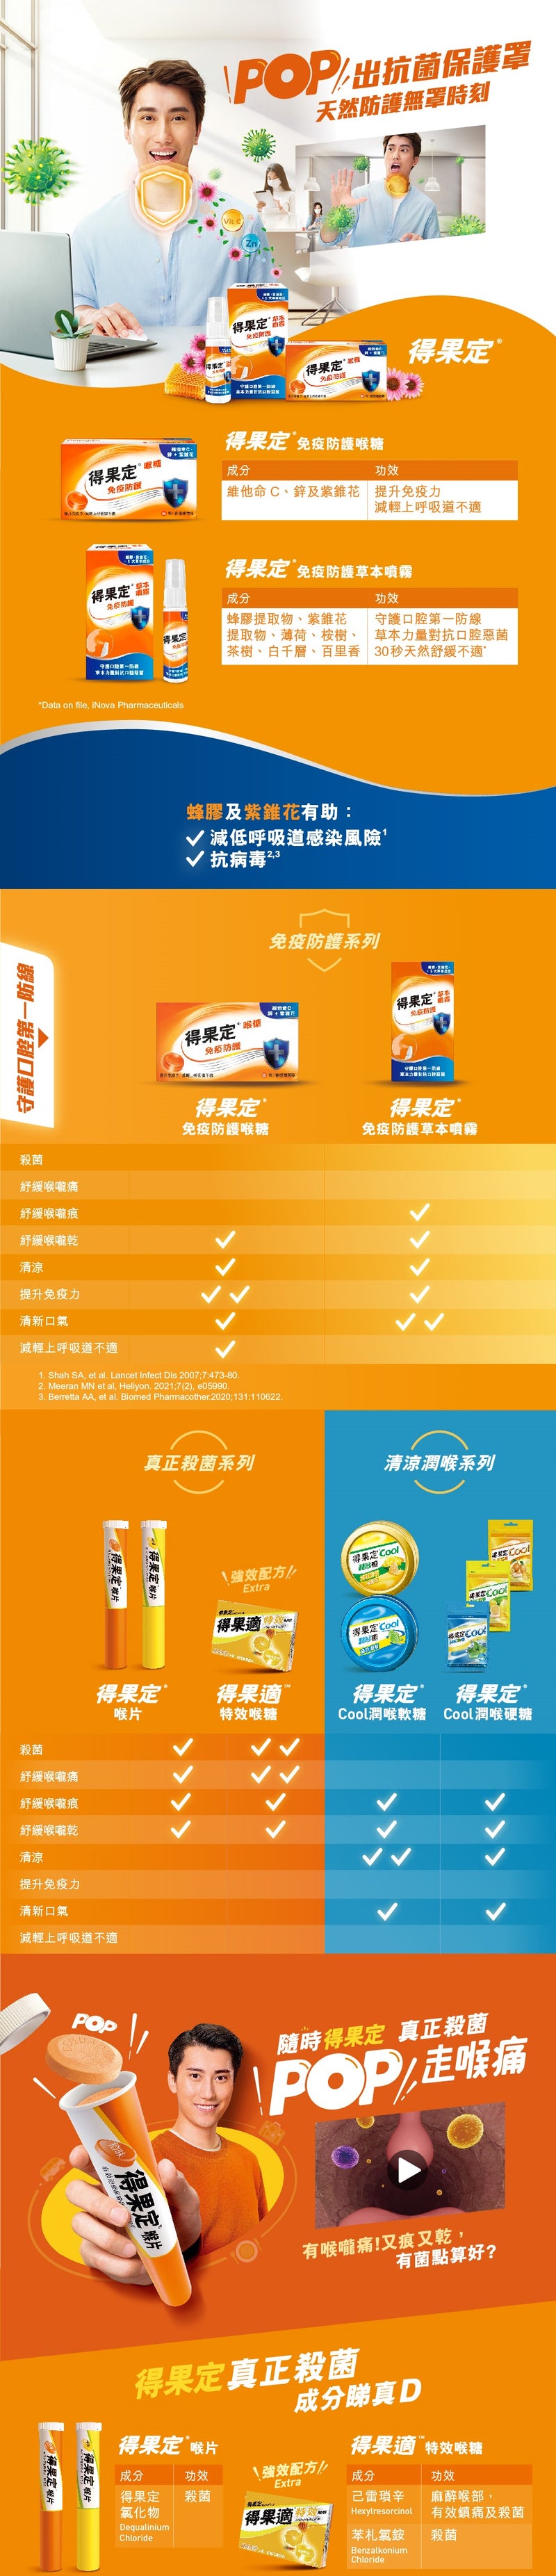 Dequadin® Immune Defence Lozenge 16's [HK Label Authentic Product] Expiry: 2024-06-30